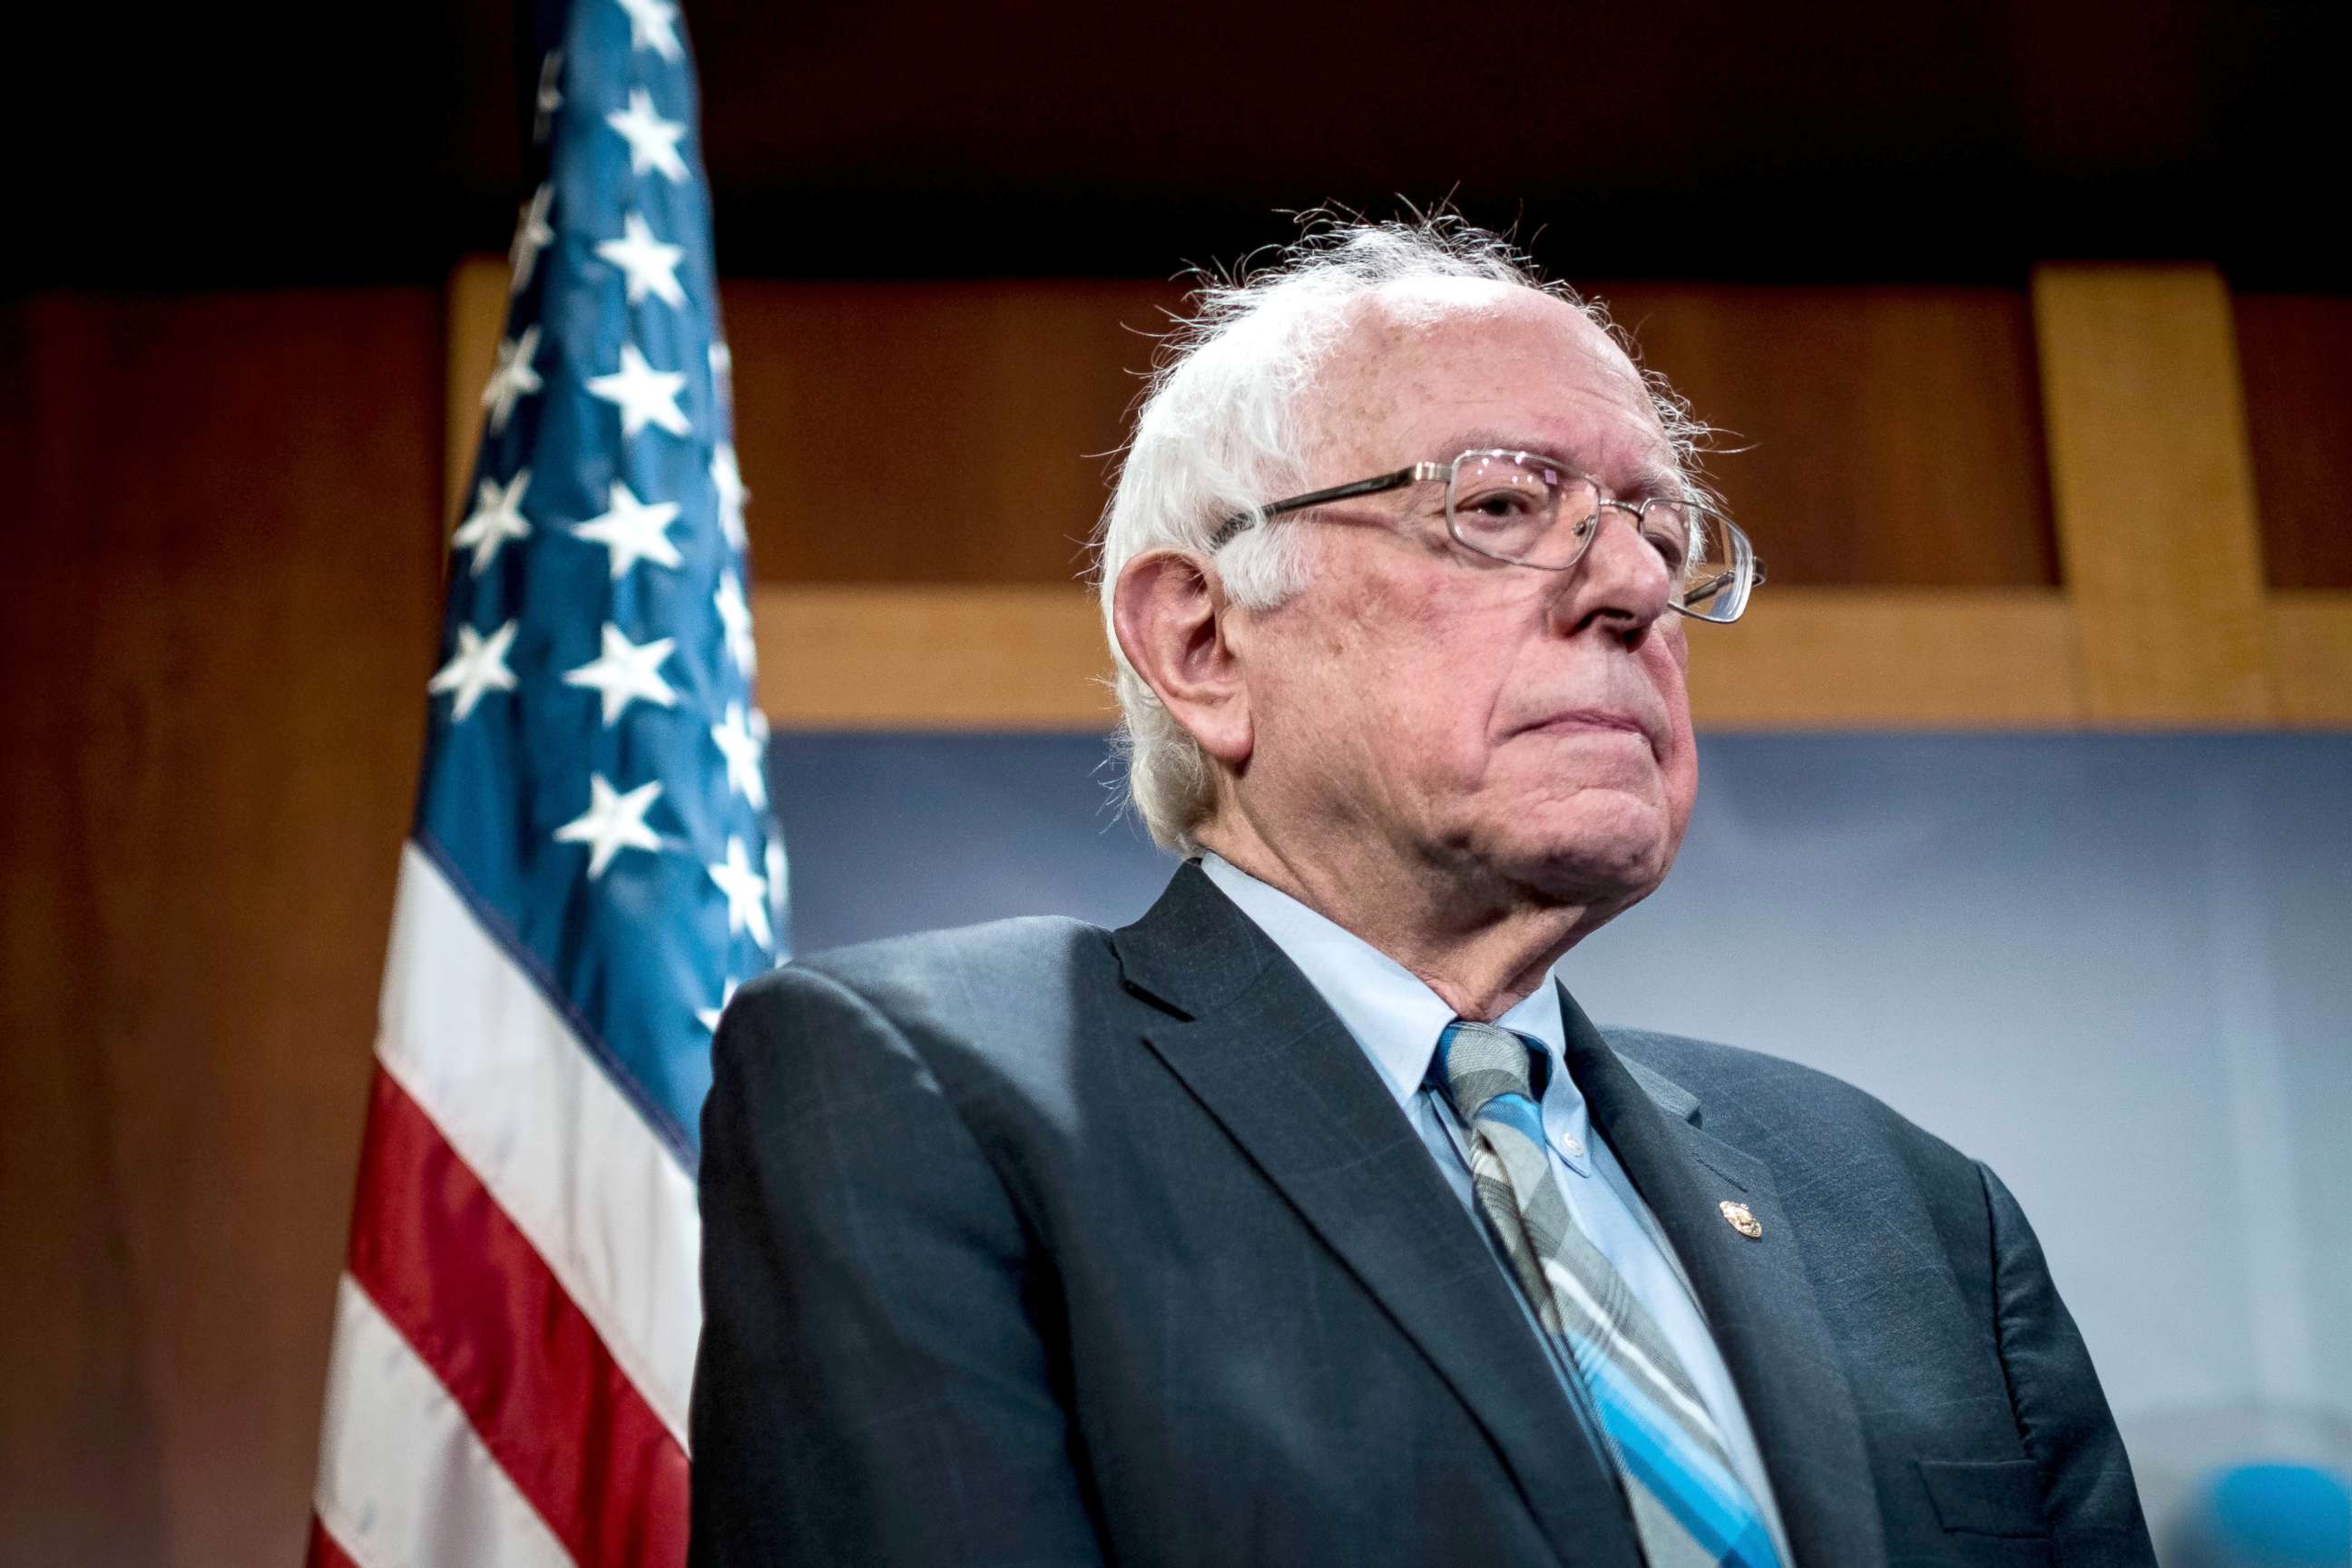 PHOTO: Senator Bernie Sanders speaks during a press conference on Capitol Hill in Washington, DC, Jan. 30, 2019.